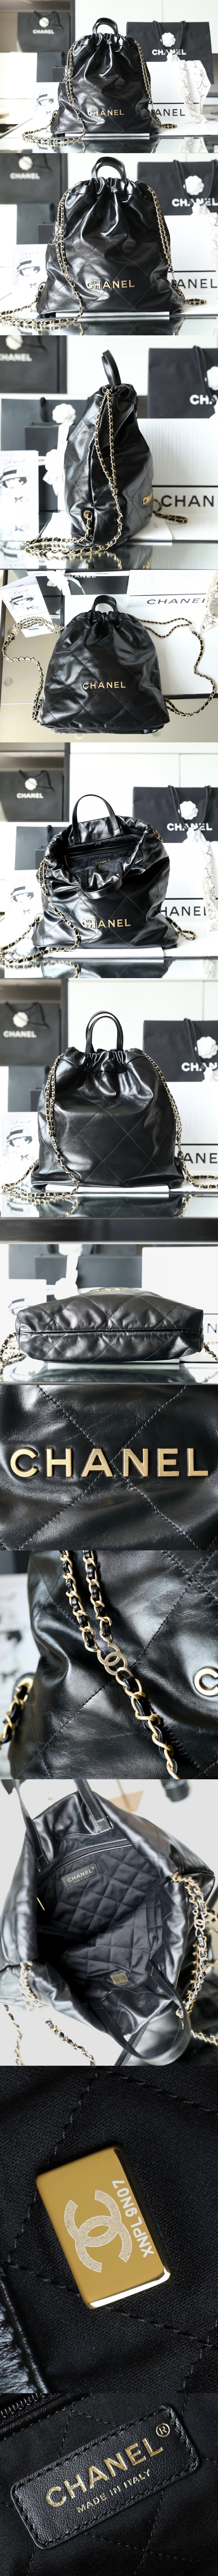 Chanel雙肩背包 專櫃售價17萬0